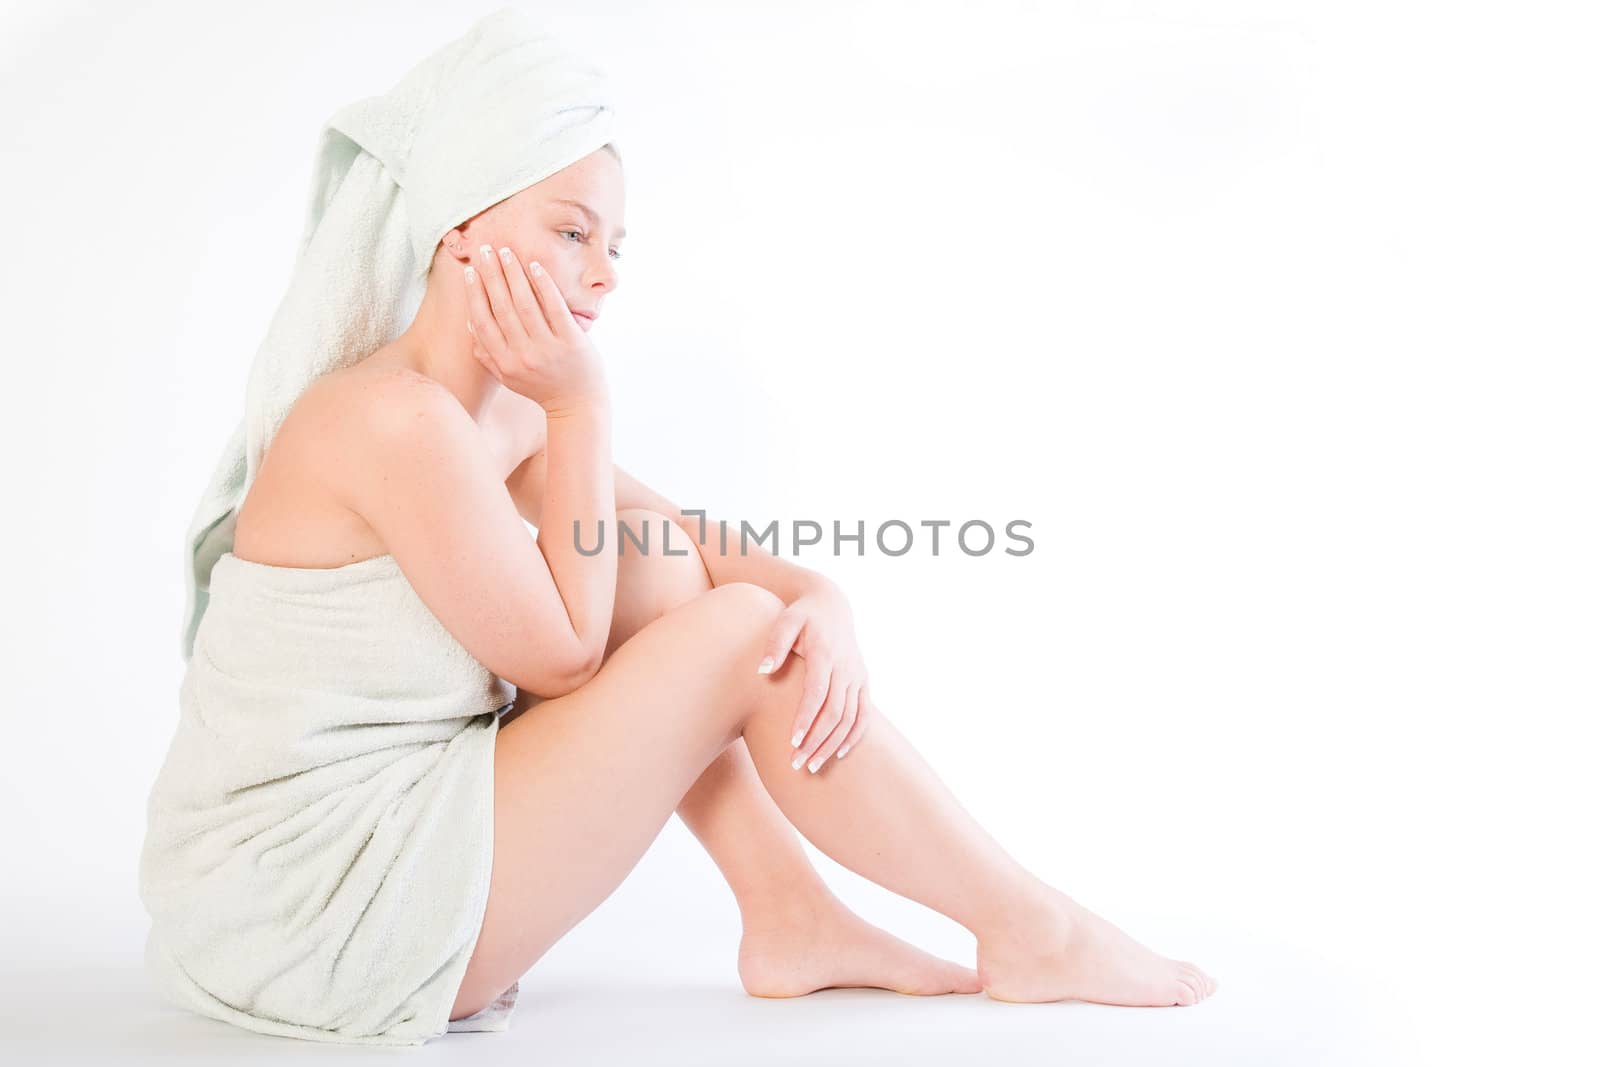 Studio portrait of a spa girl sitting